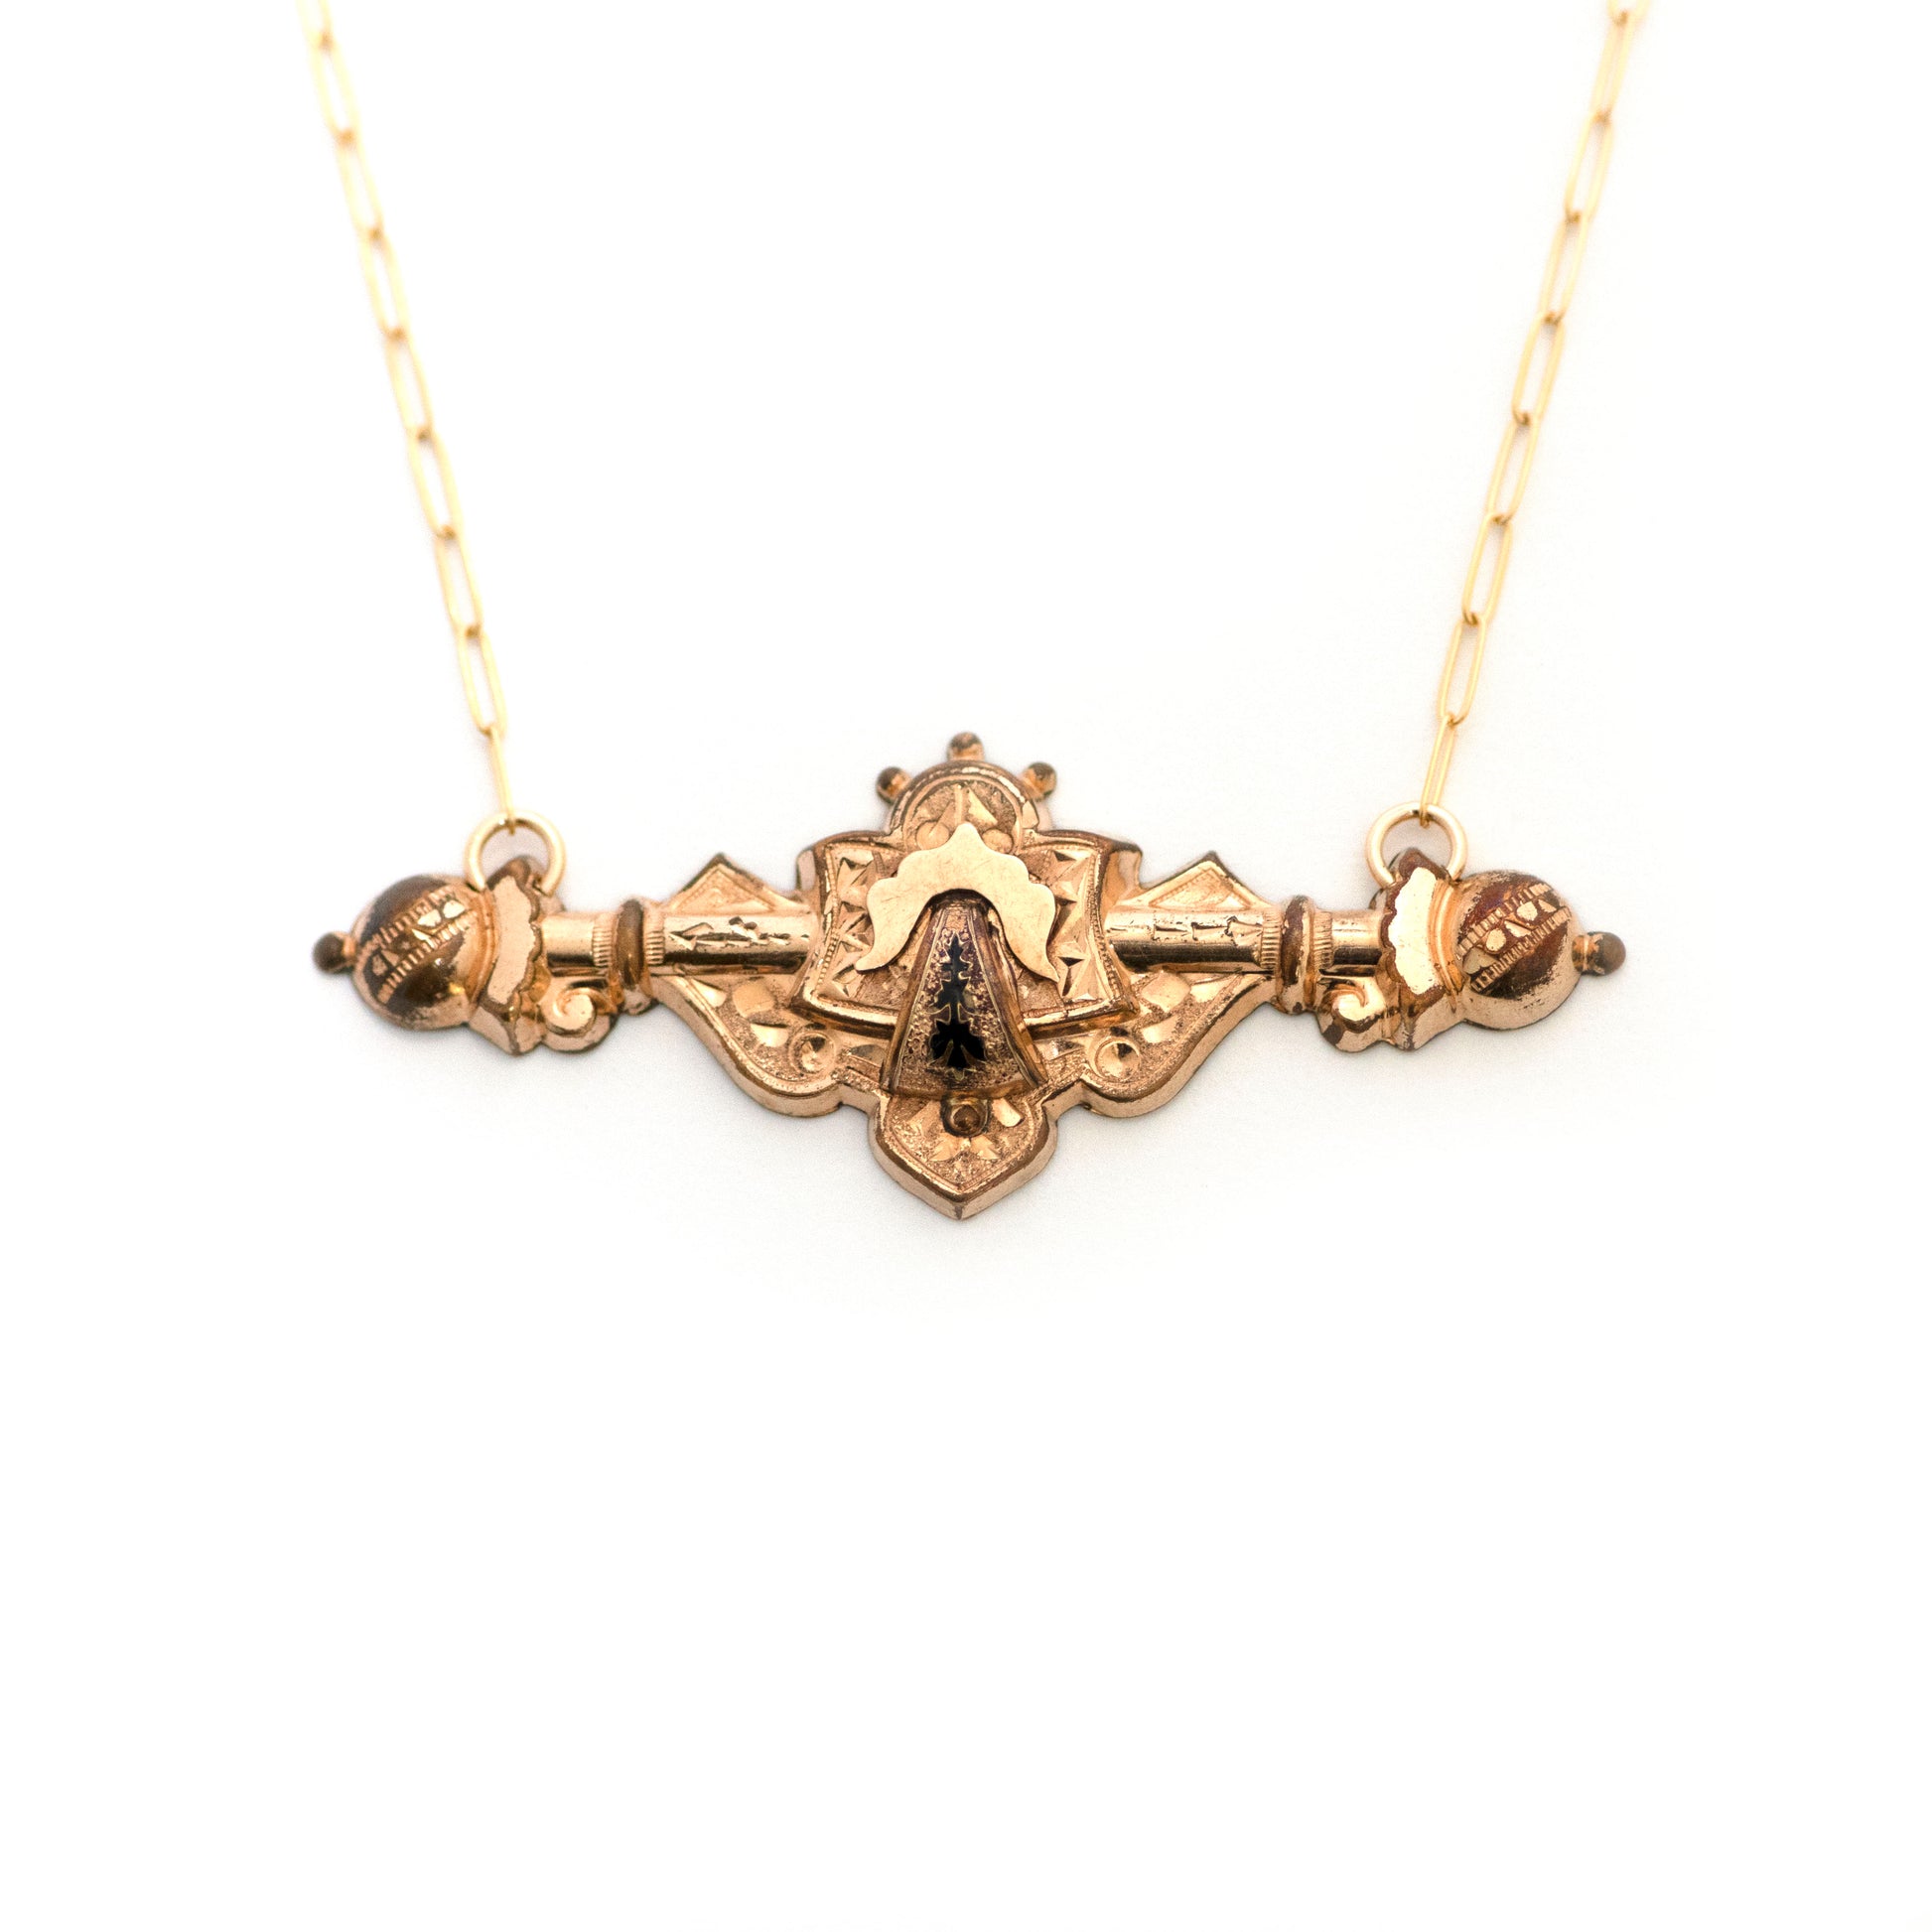 Extravagant Buckle Victorian Bar Pin Necklace